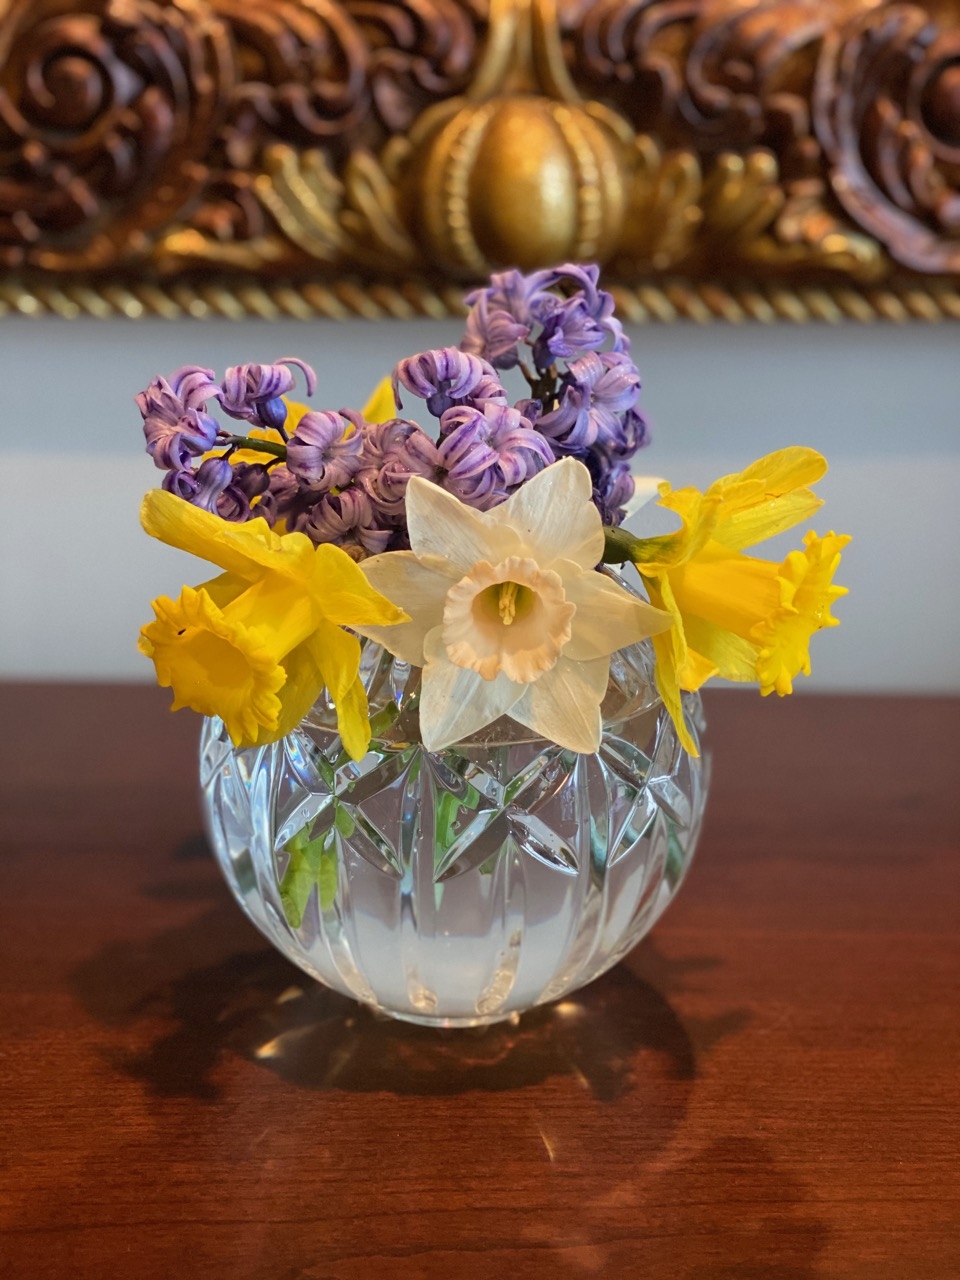 14 Summer Lavender Home Decor Ideas » Lady Decluttered